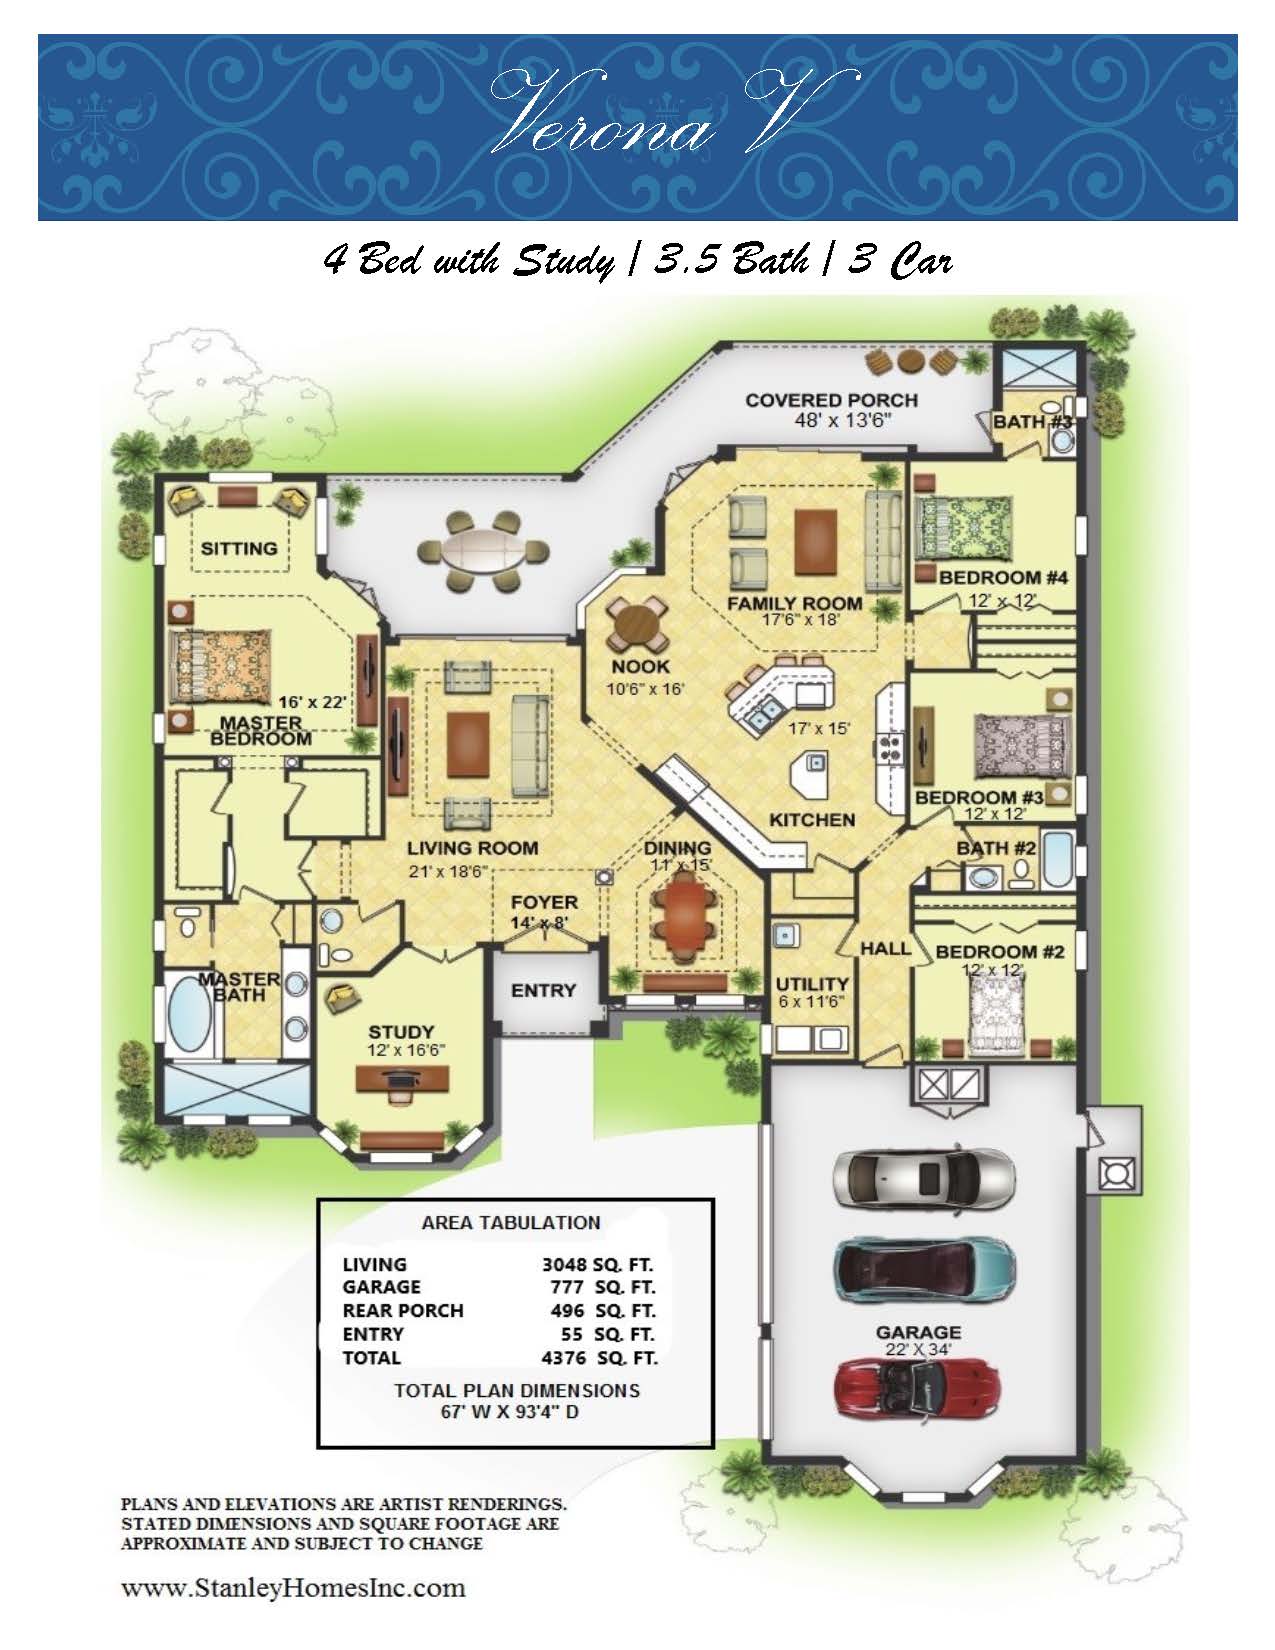 Stanley Homes Verona V Floor Plan Custom Homes in Viera FL Brevard